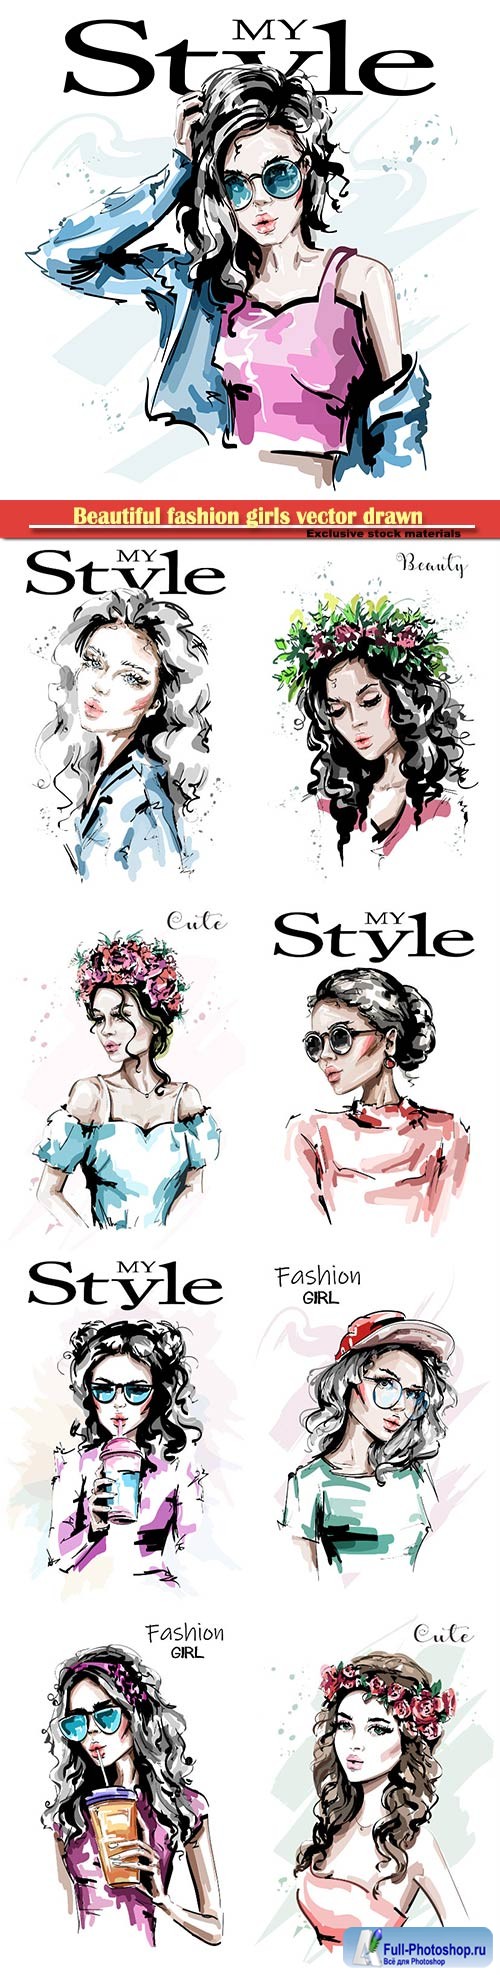 Beautiful fashion girls vector drawn illustrations